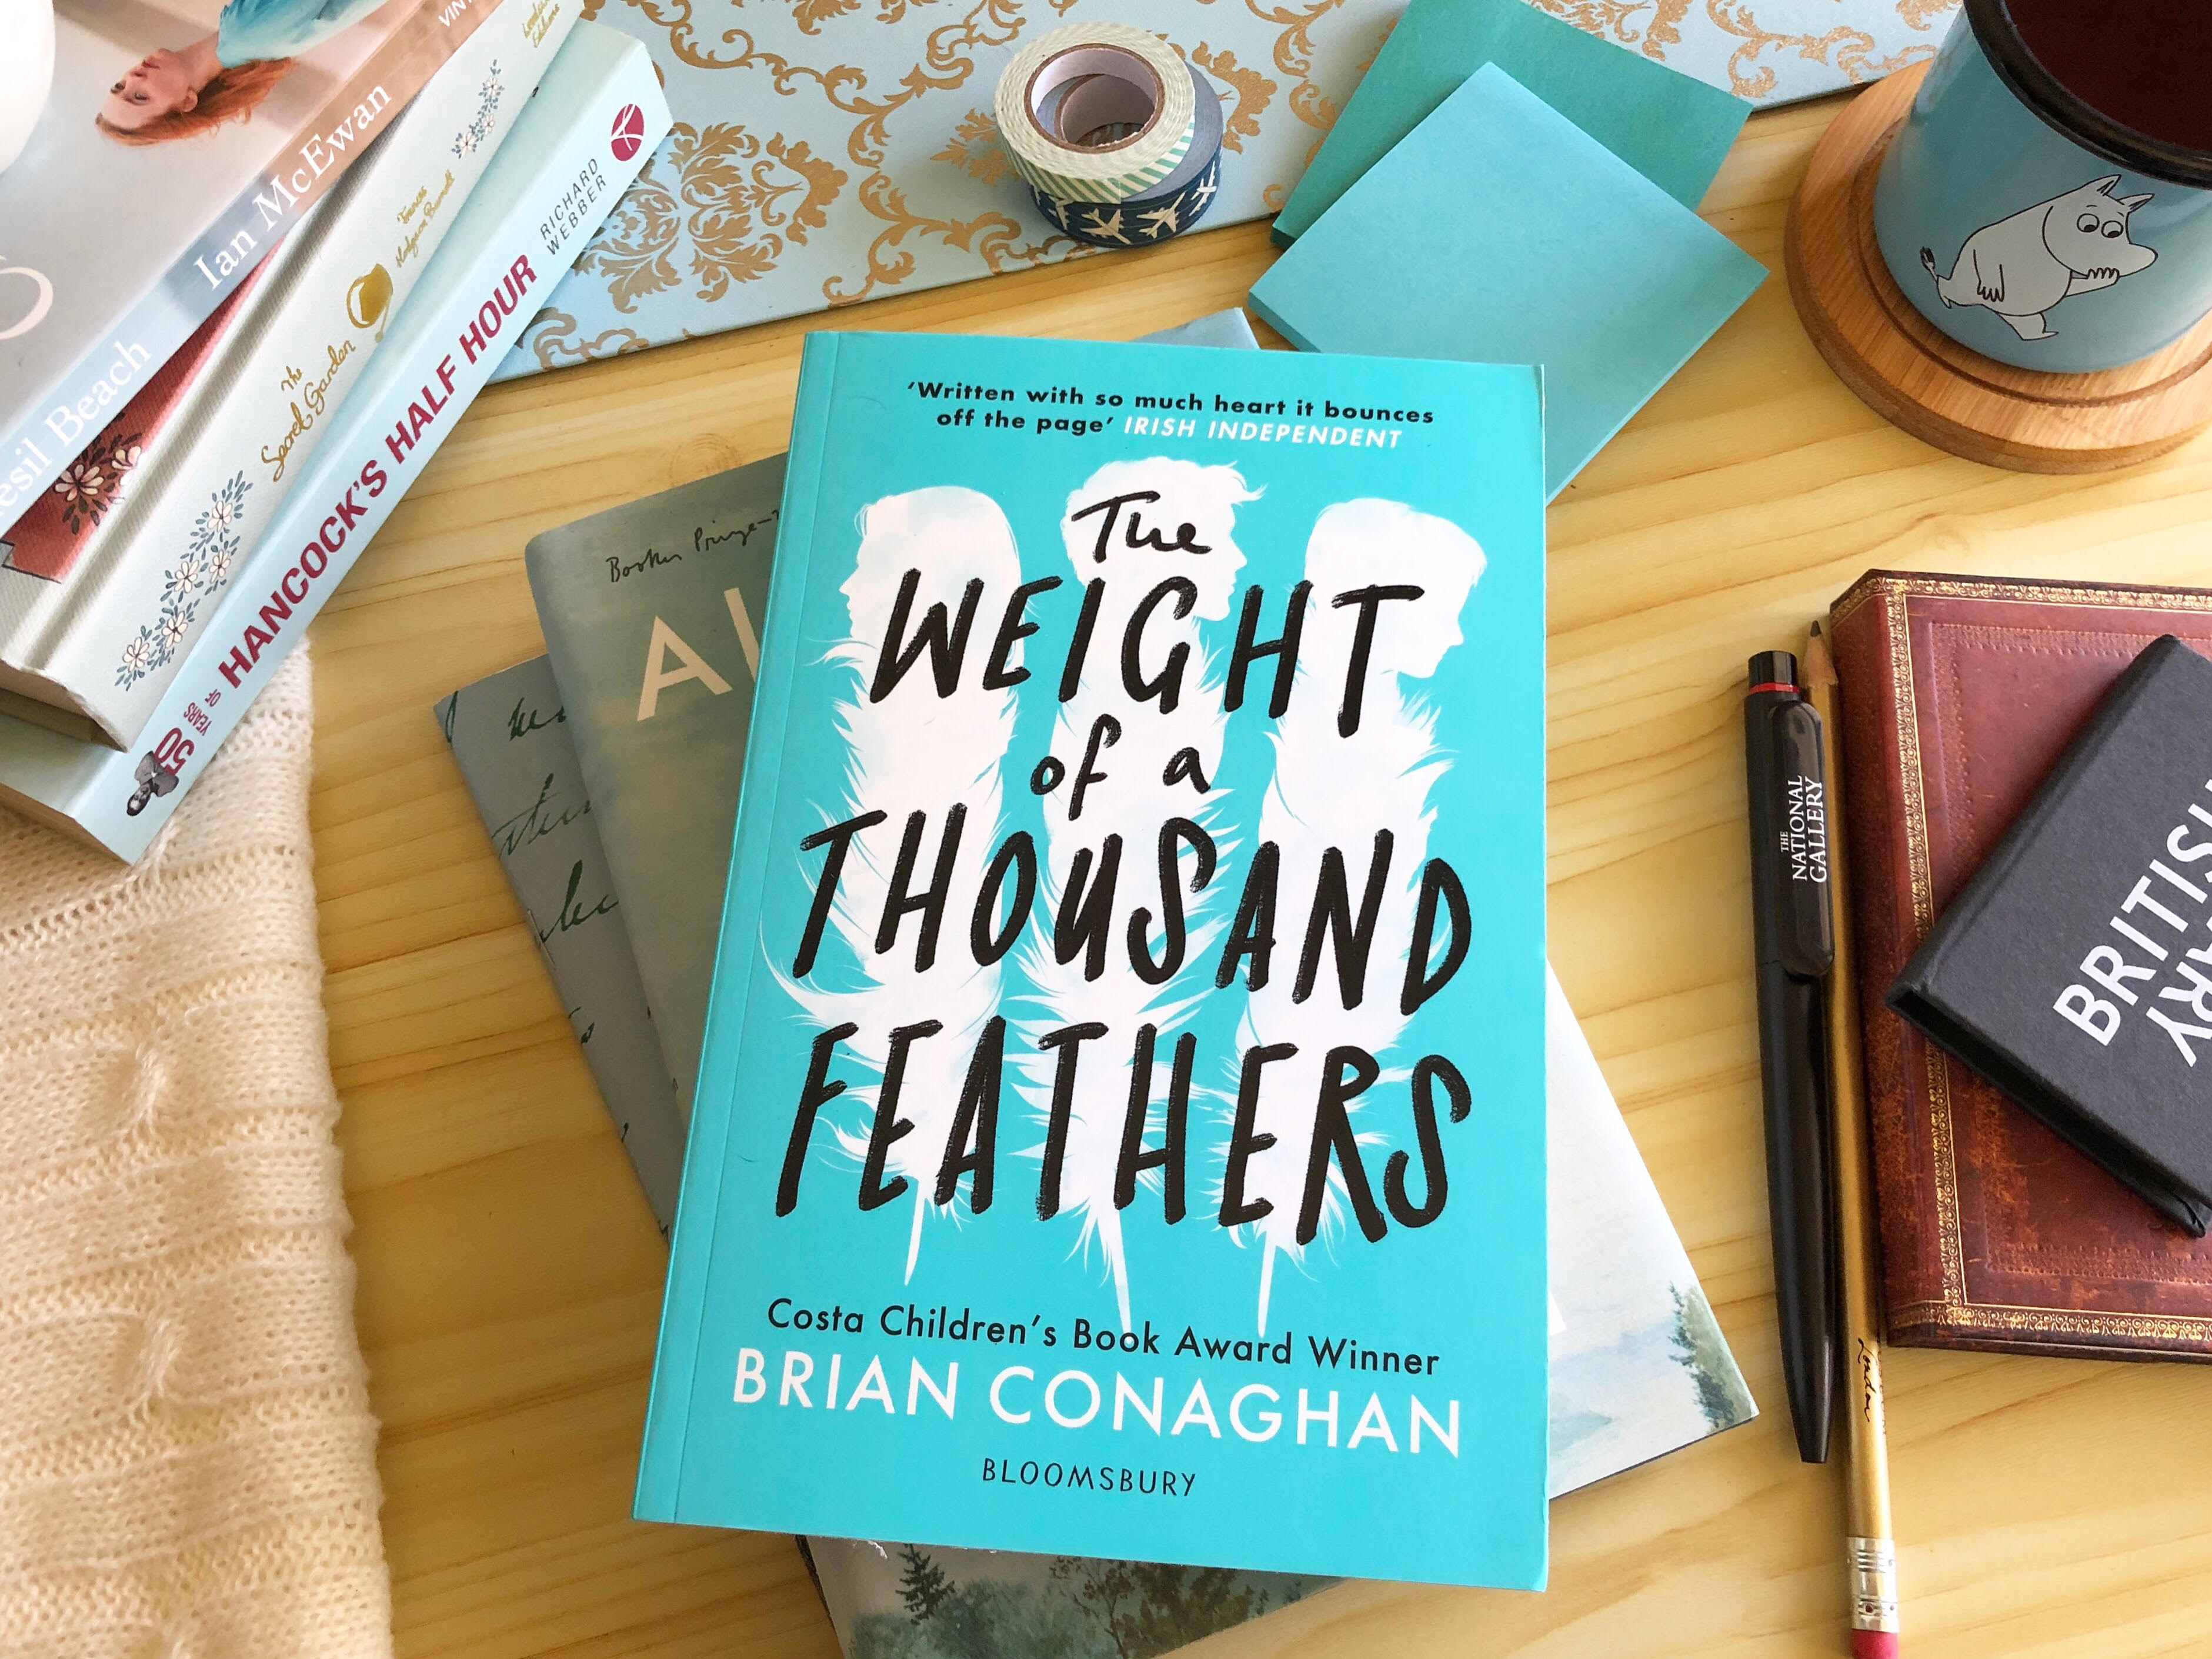 Resenha de The Weight of a Thousand Feathers de Brian Conaghan